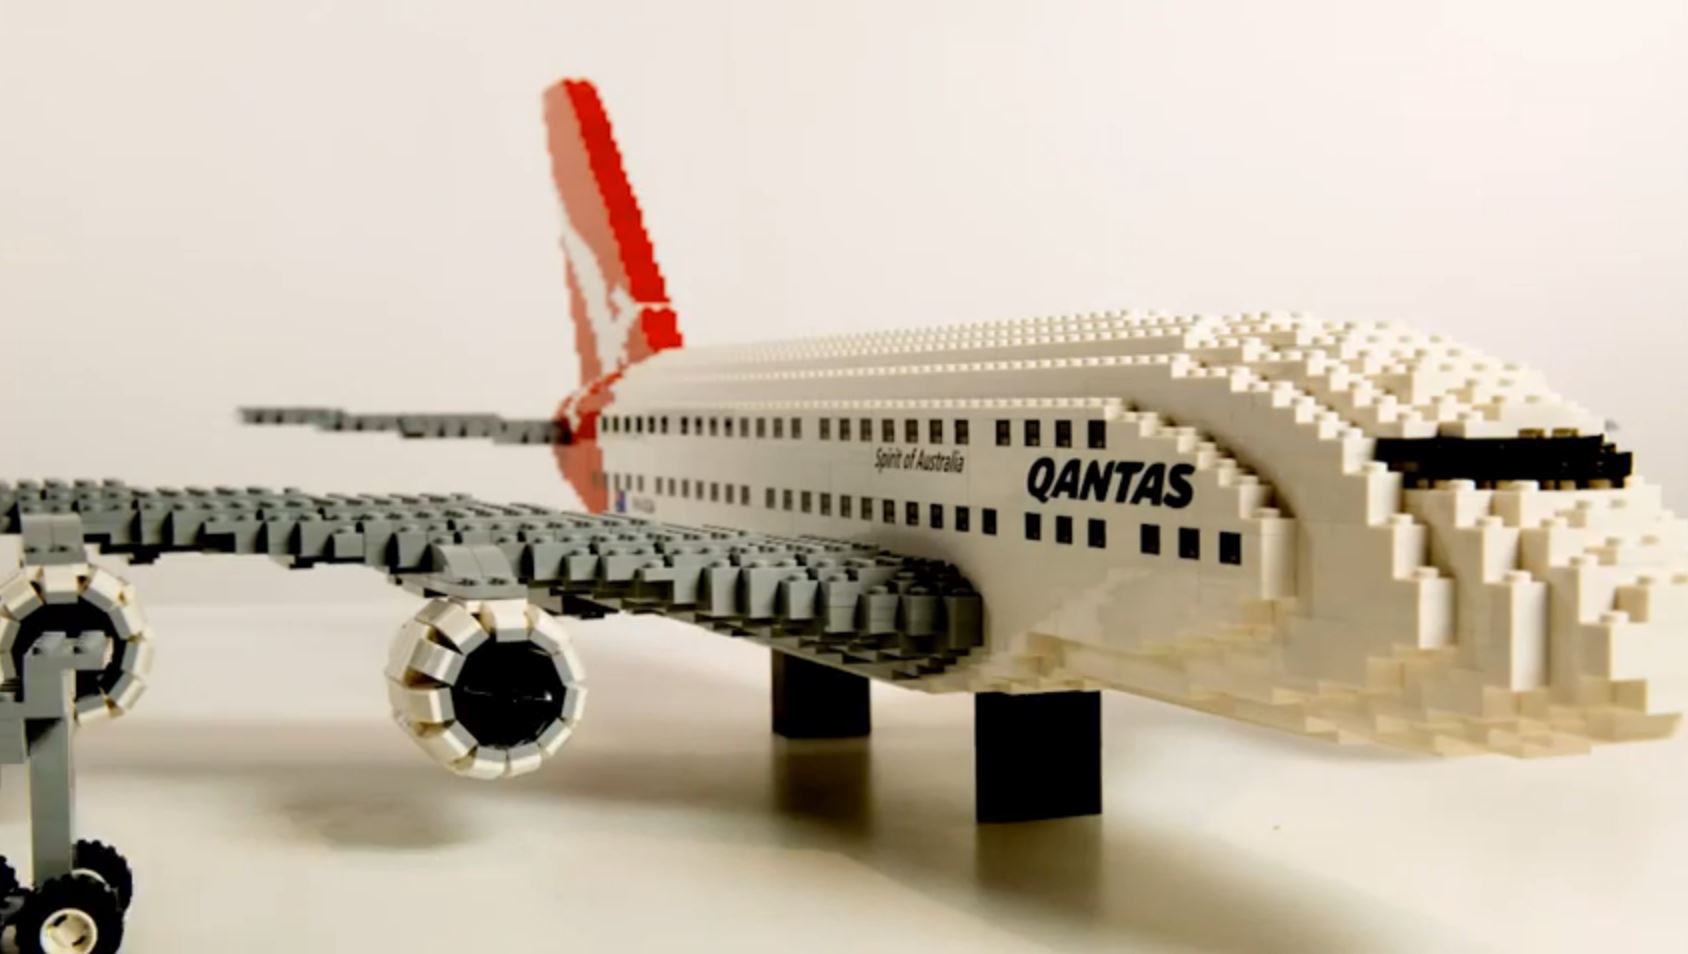 Qantas A380 built with LEGO